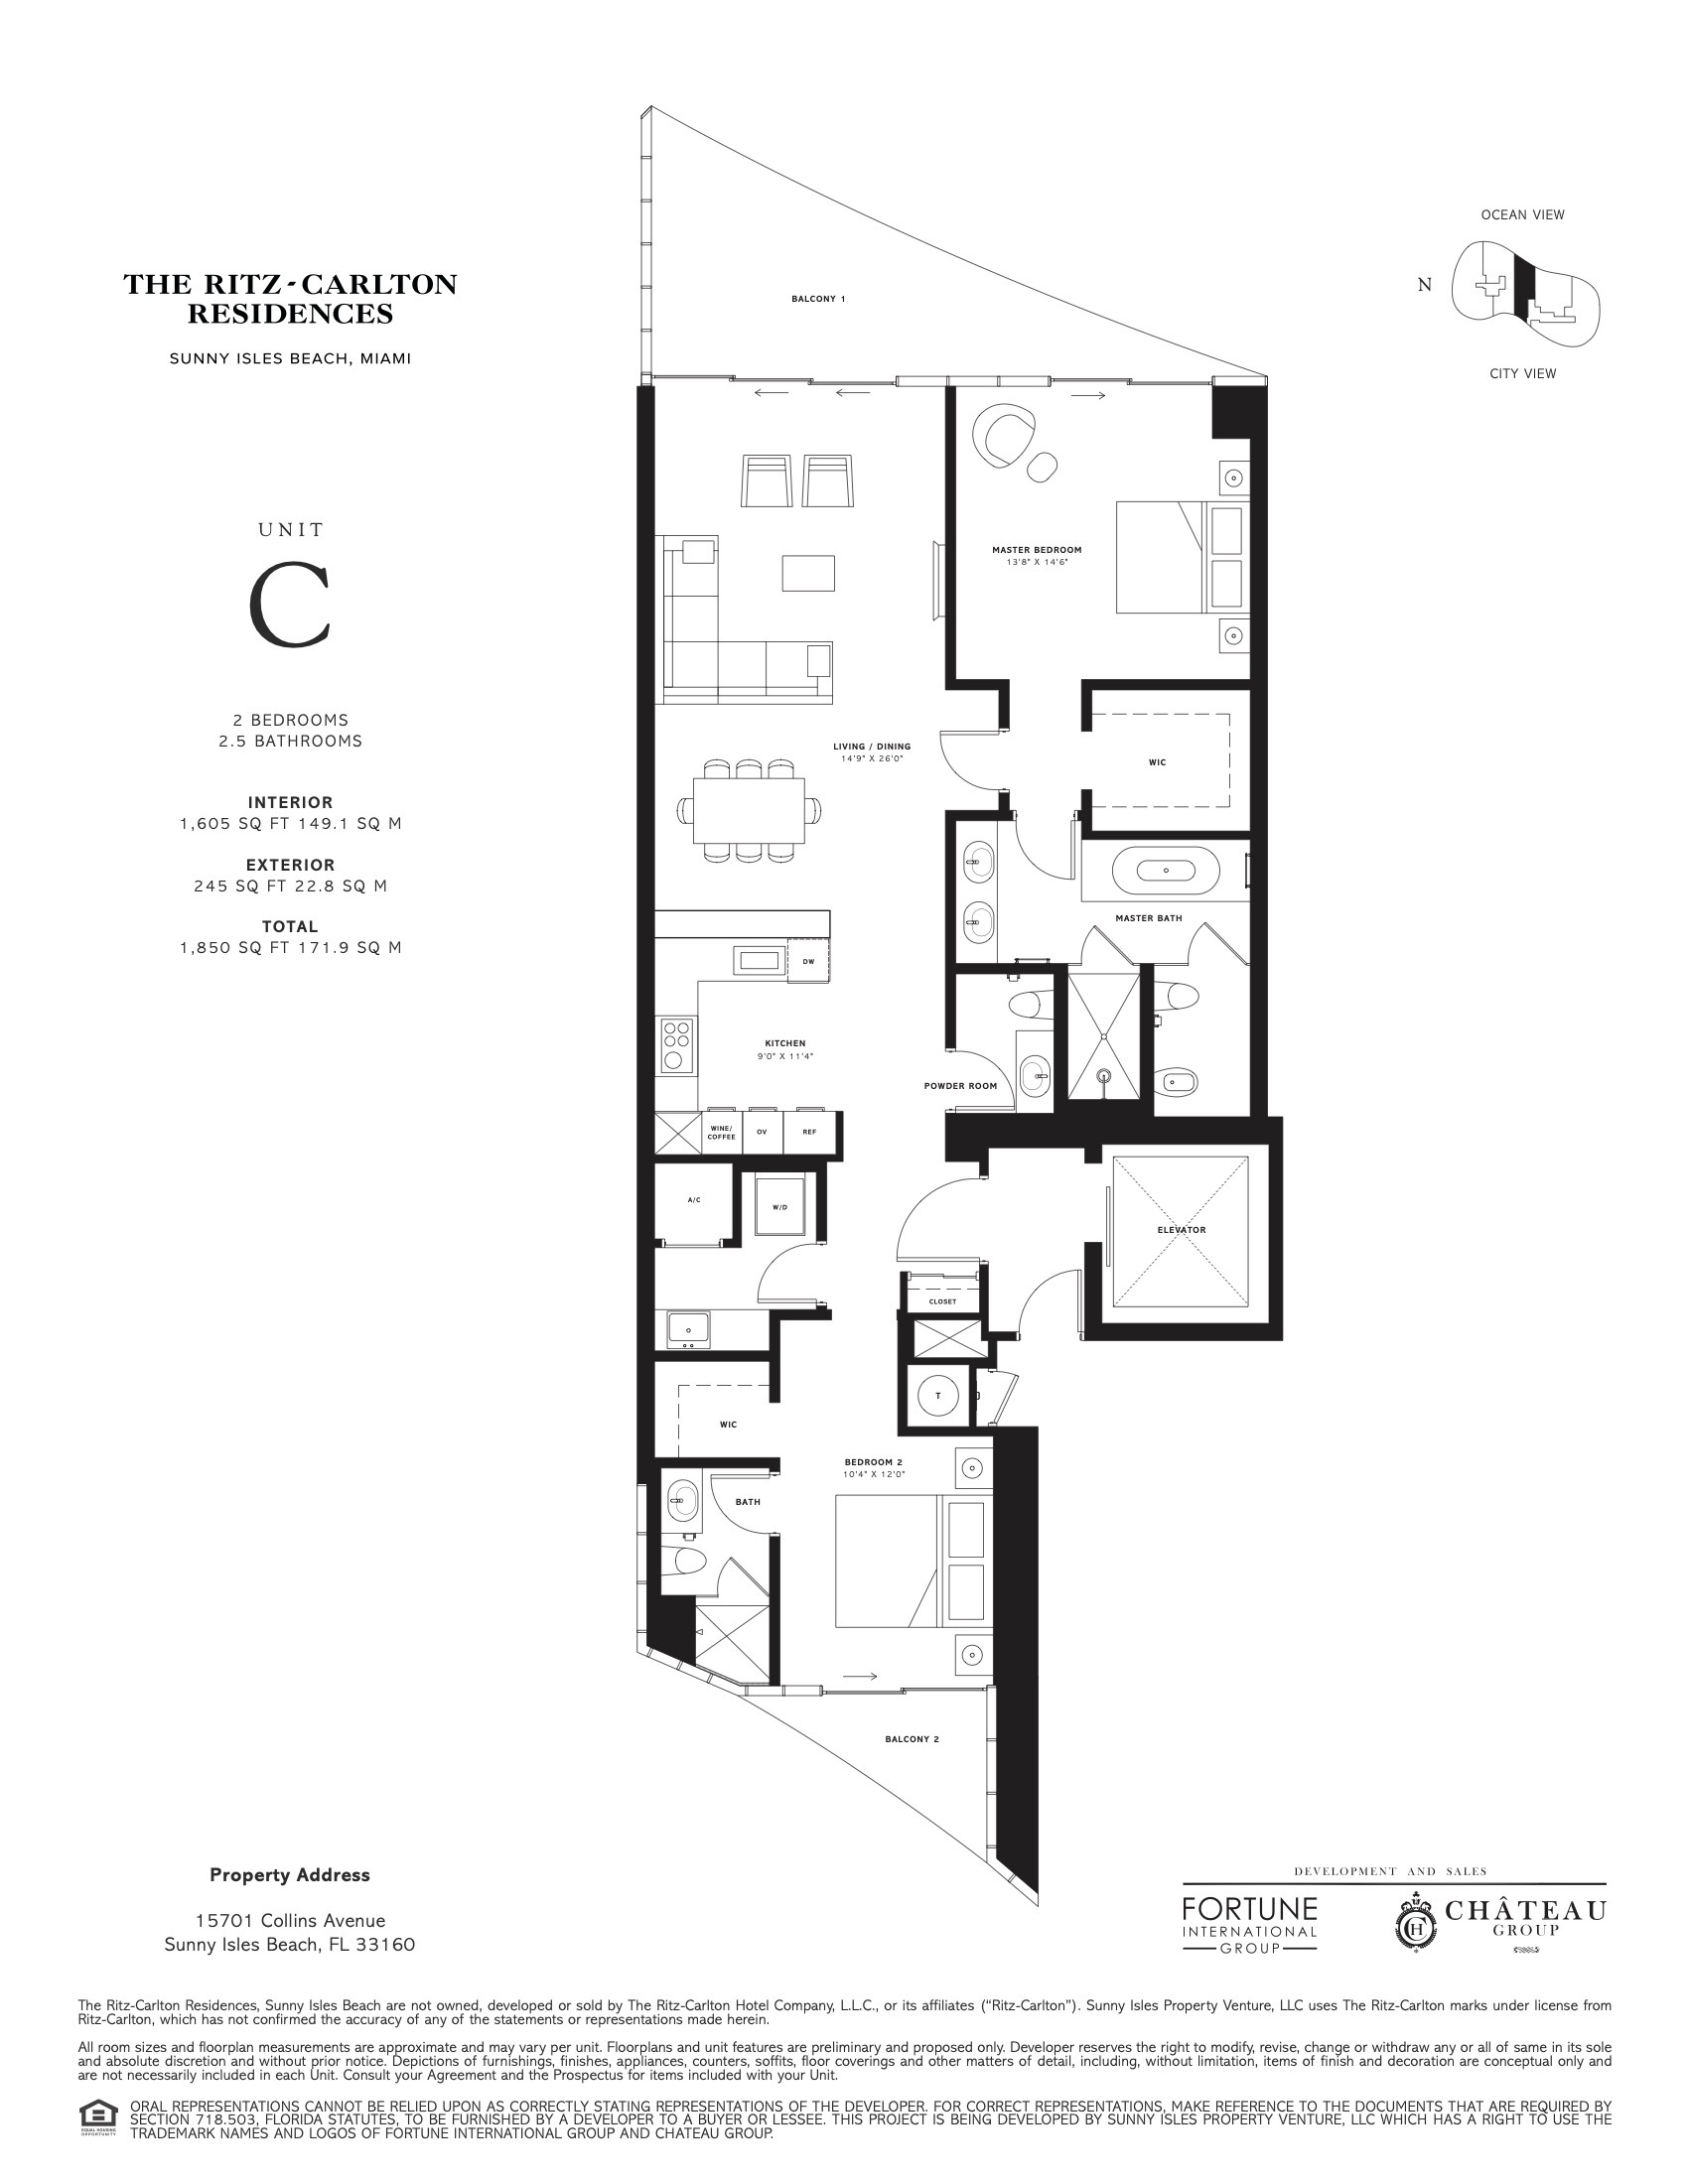 Floor Plan for Ritz-Carlton Sunny Isles Floorplans, Unit C